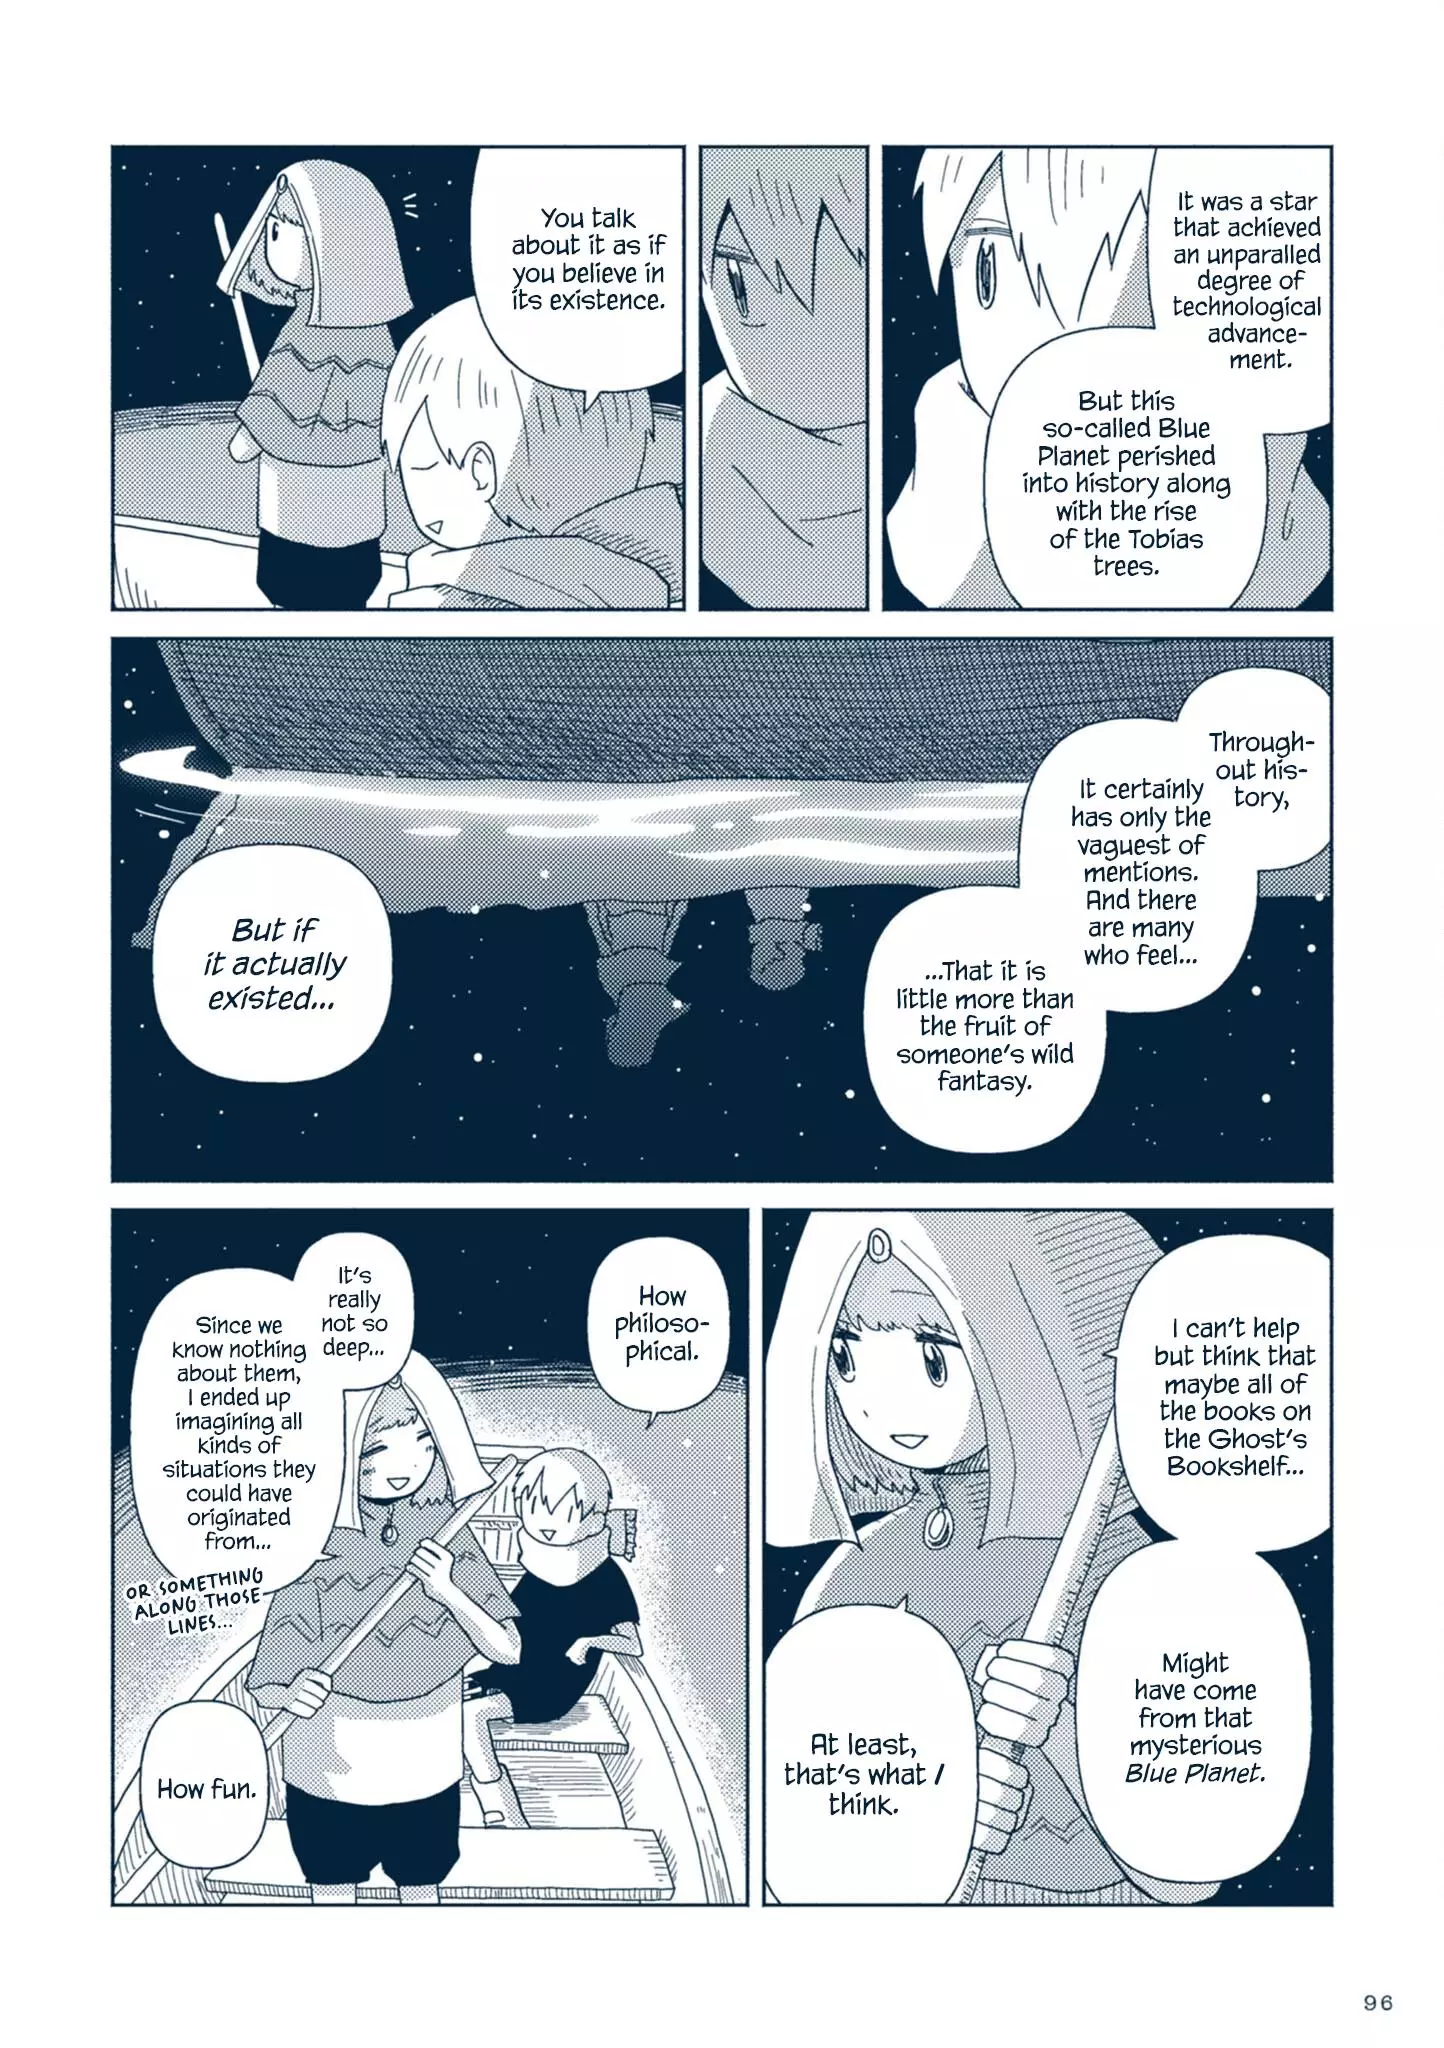 Star Tripper: Planetarium Ghost Travel - 3 page 18-9feefed0